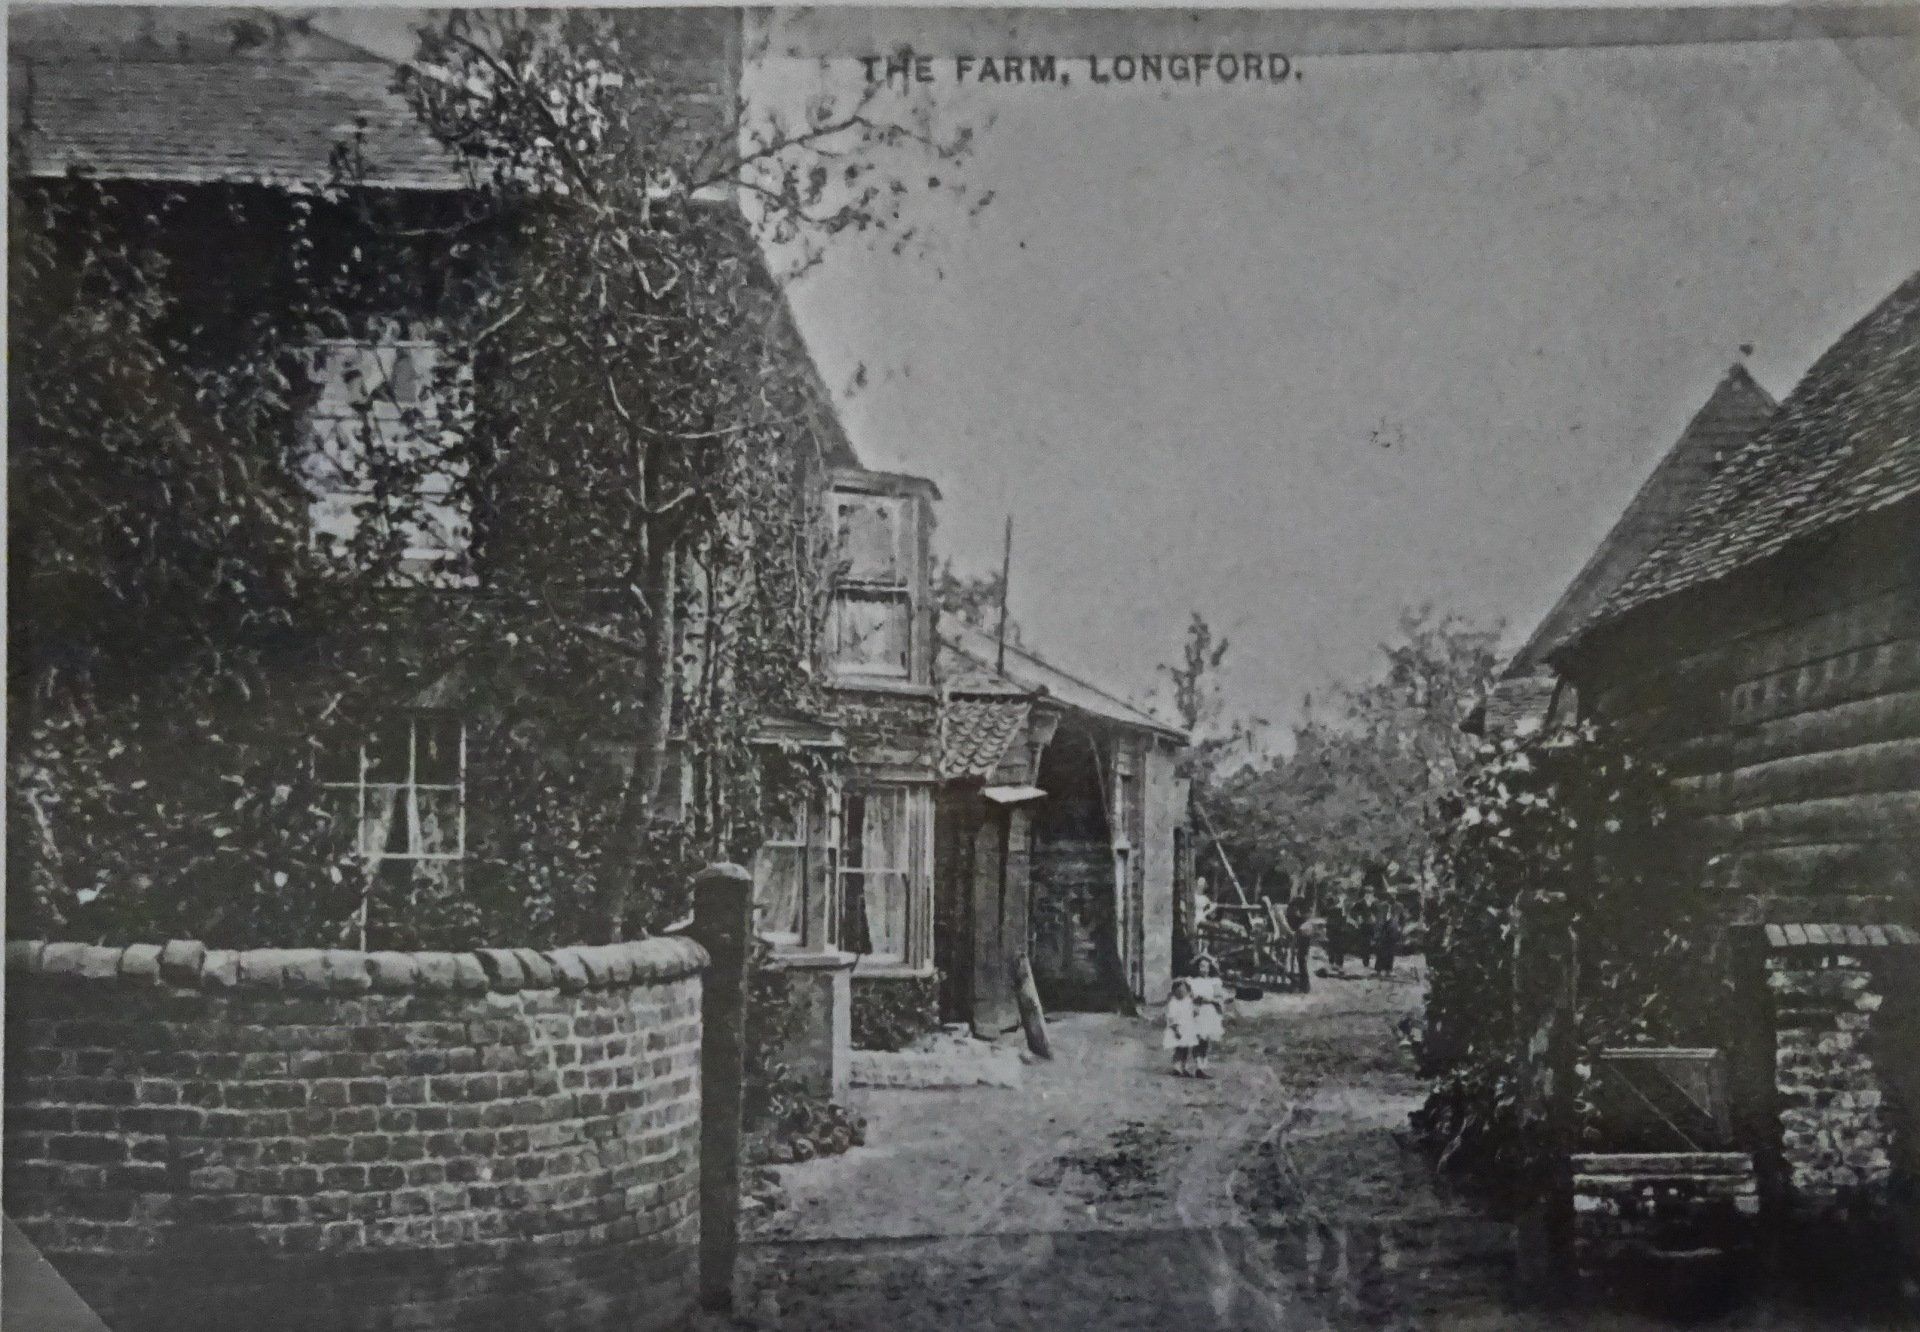 The Farm, Longford, early 20th century